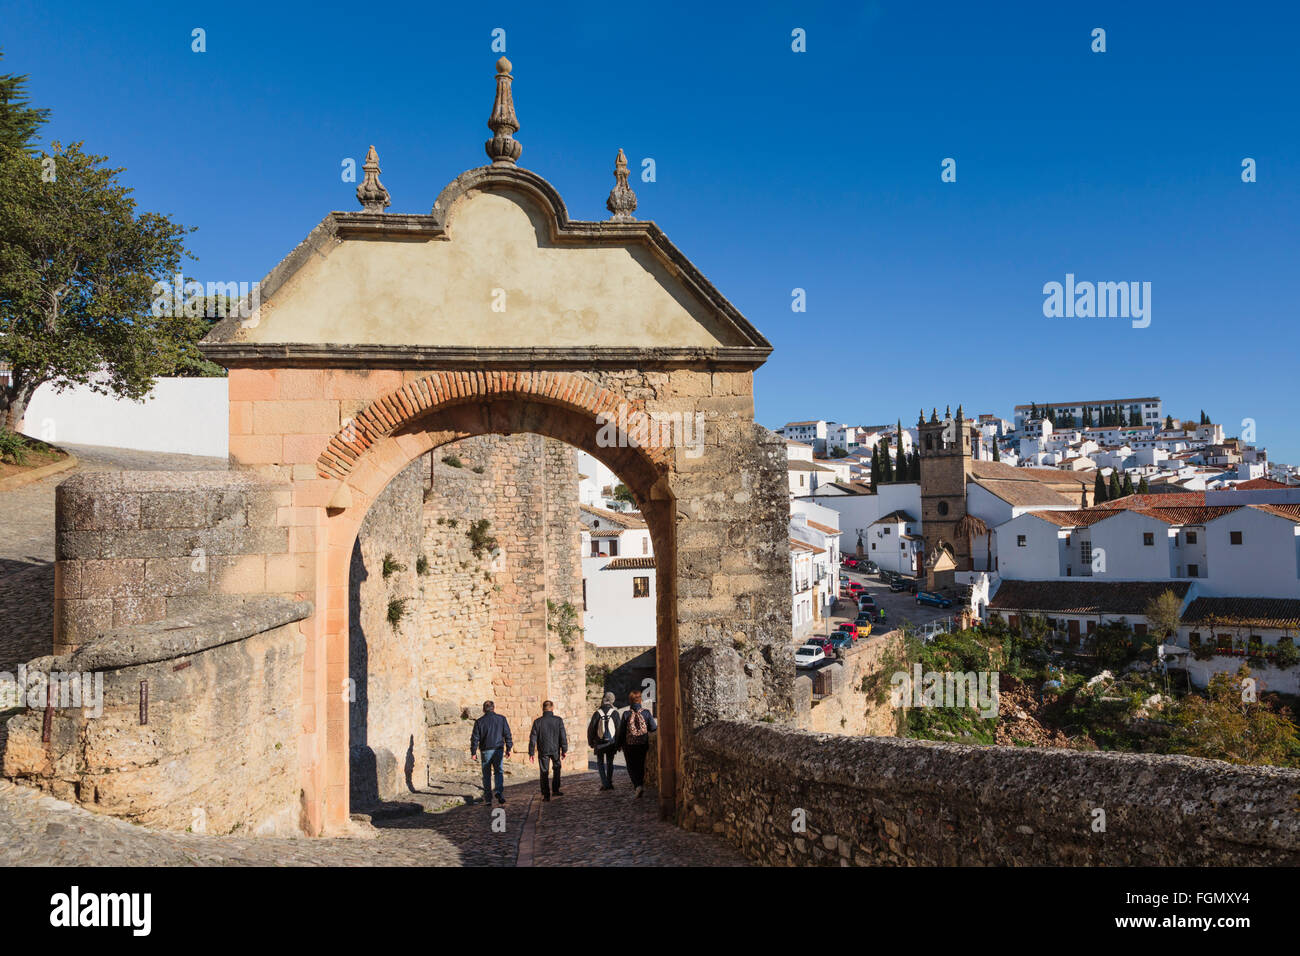 Ronda, Malaga Province, Andalusia, southern Spain. Arch of Philip V, built 1742.  Arco de Felipe V. Stock Photo